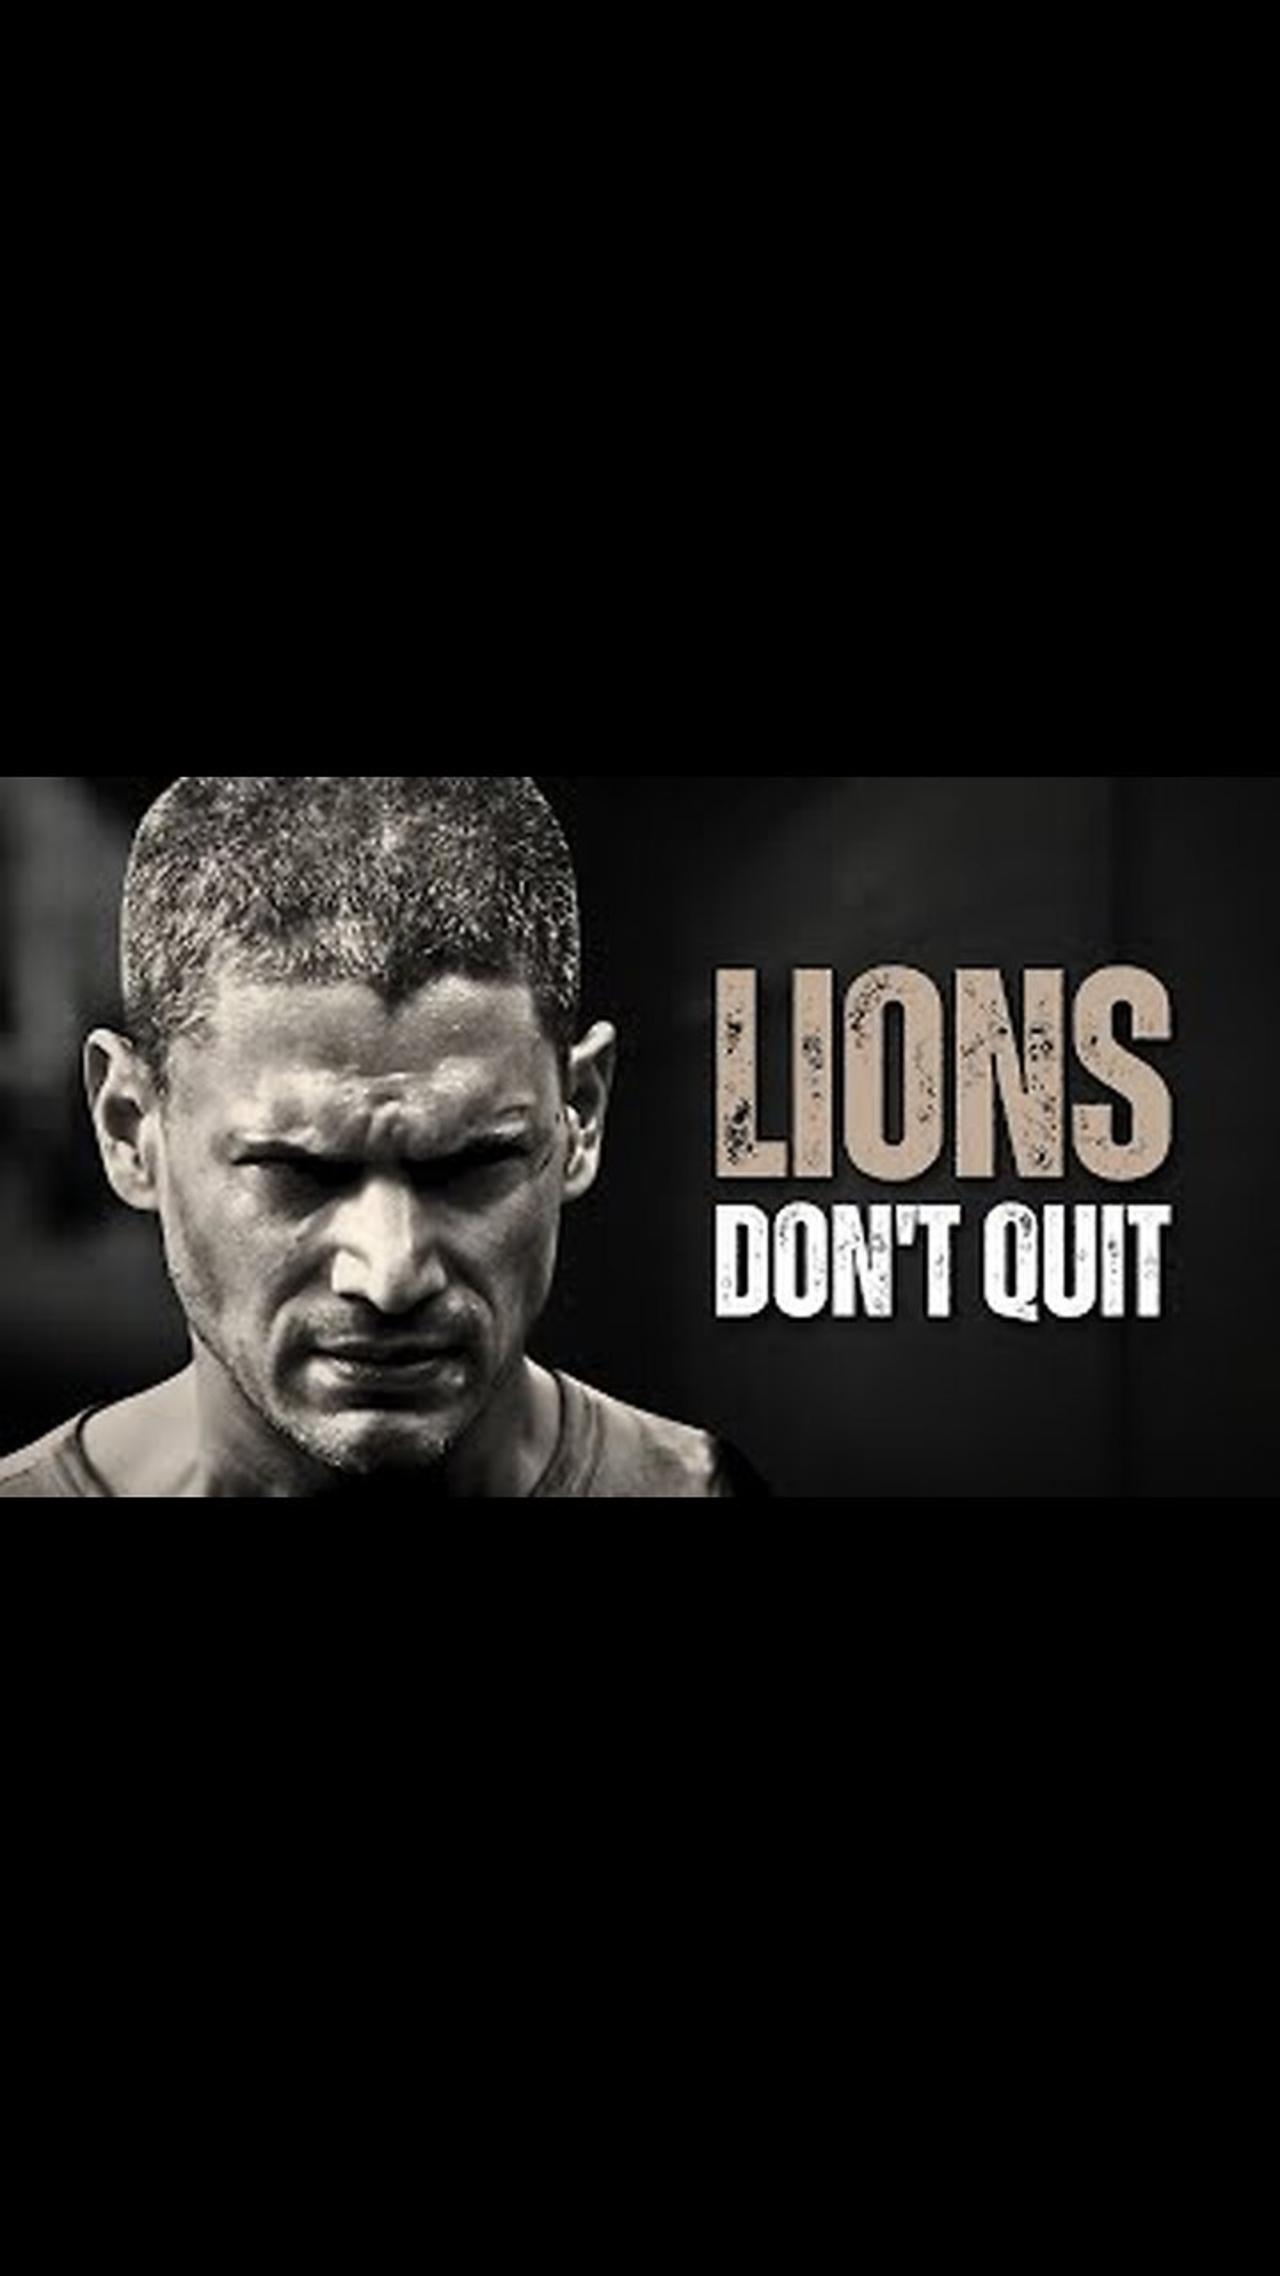 LIONS DON'T QUIT - Motivational Speech"